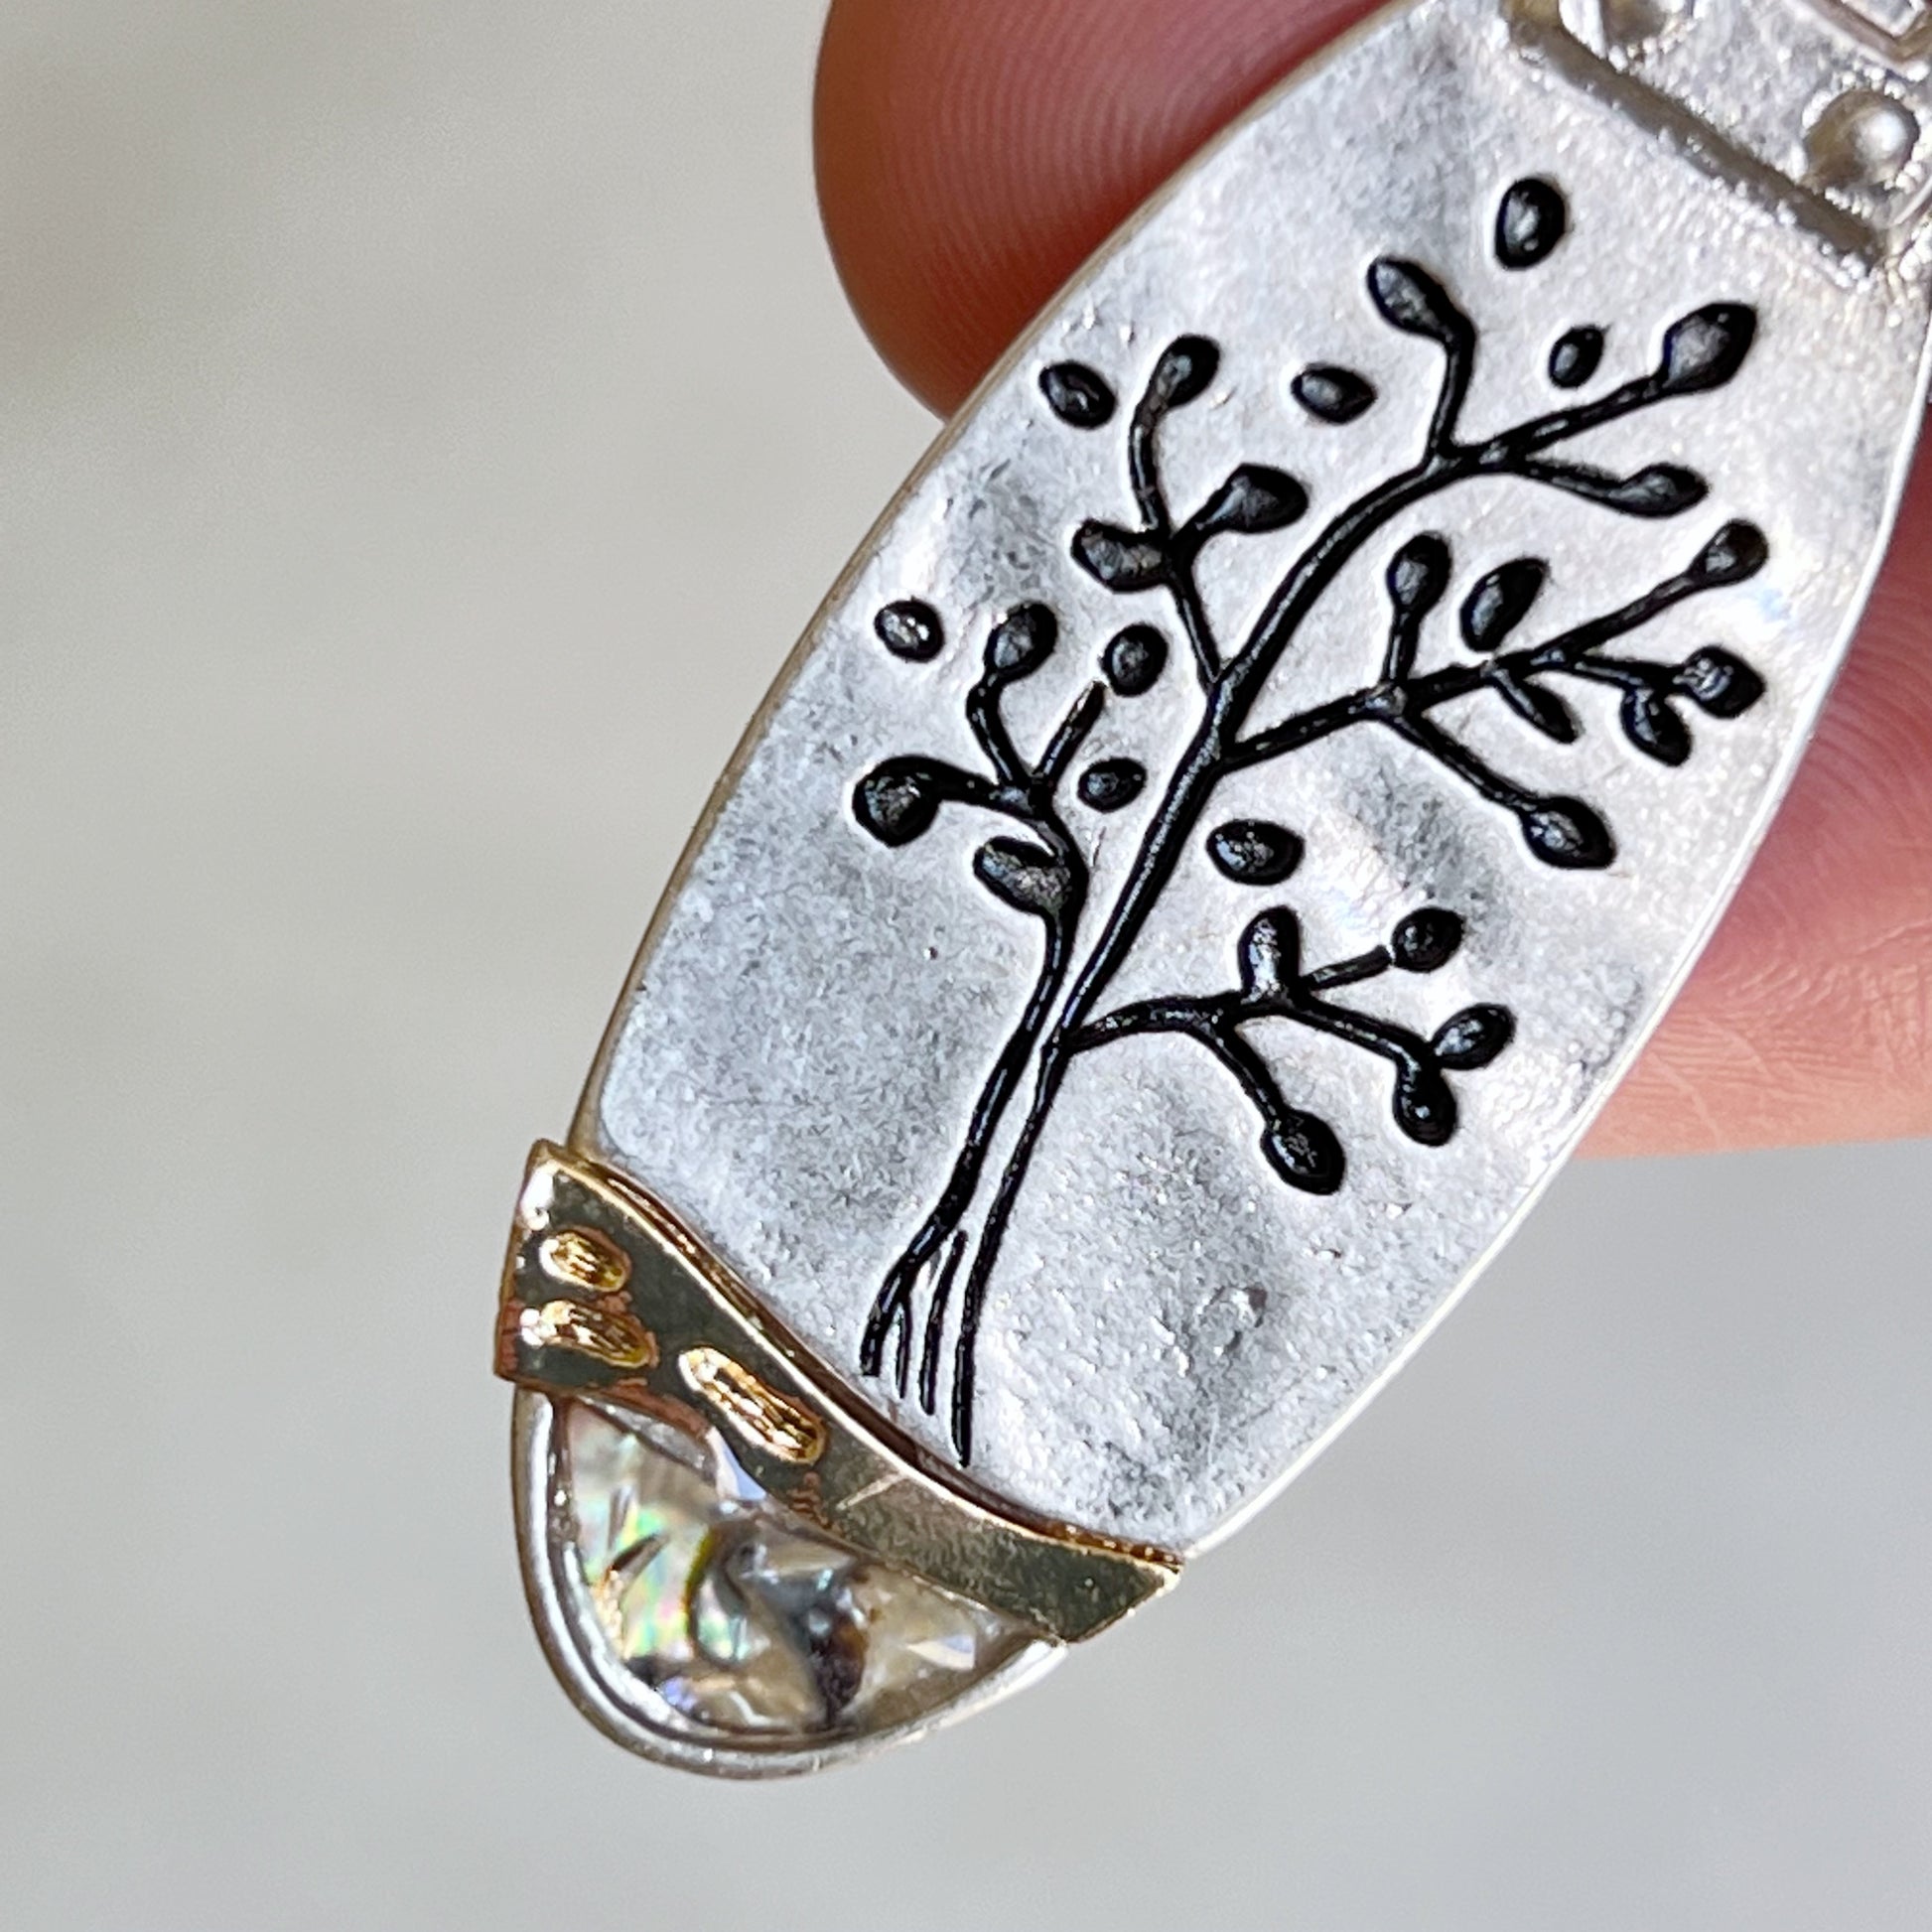 Tree Zipper Pull Keychain Handbag Charm with Inlaid Abalone Shell